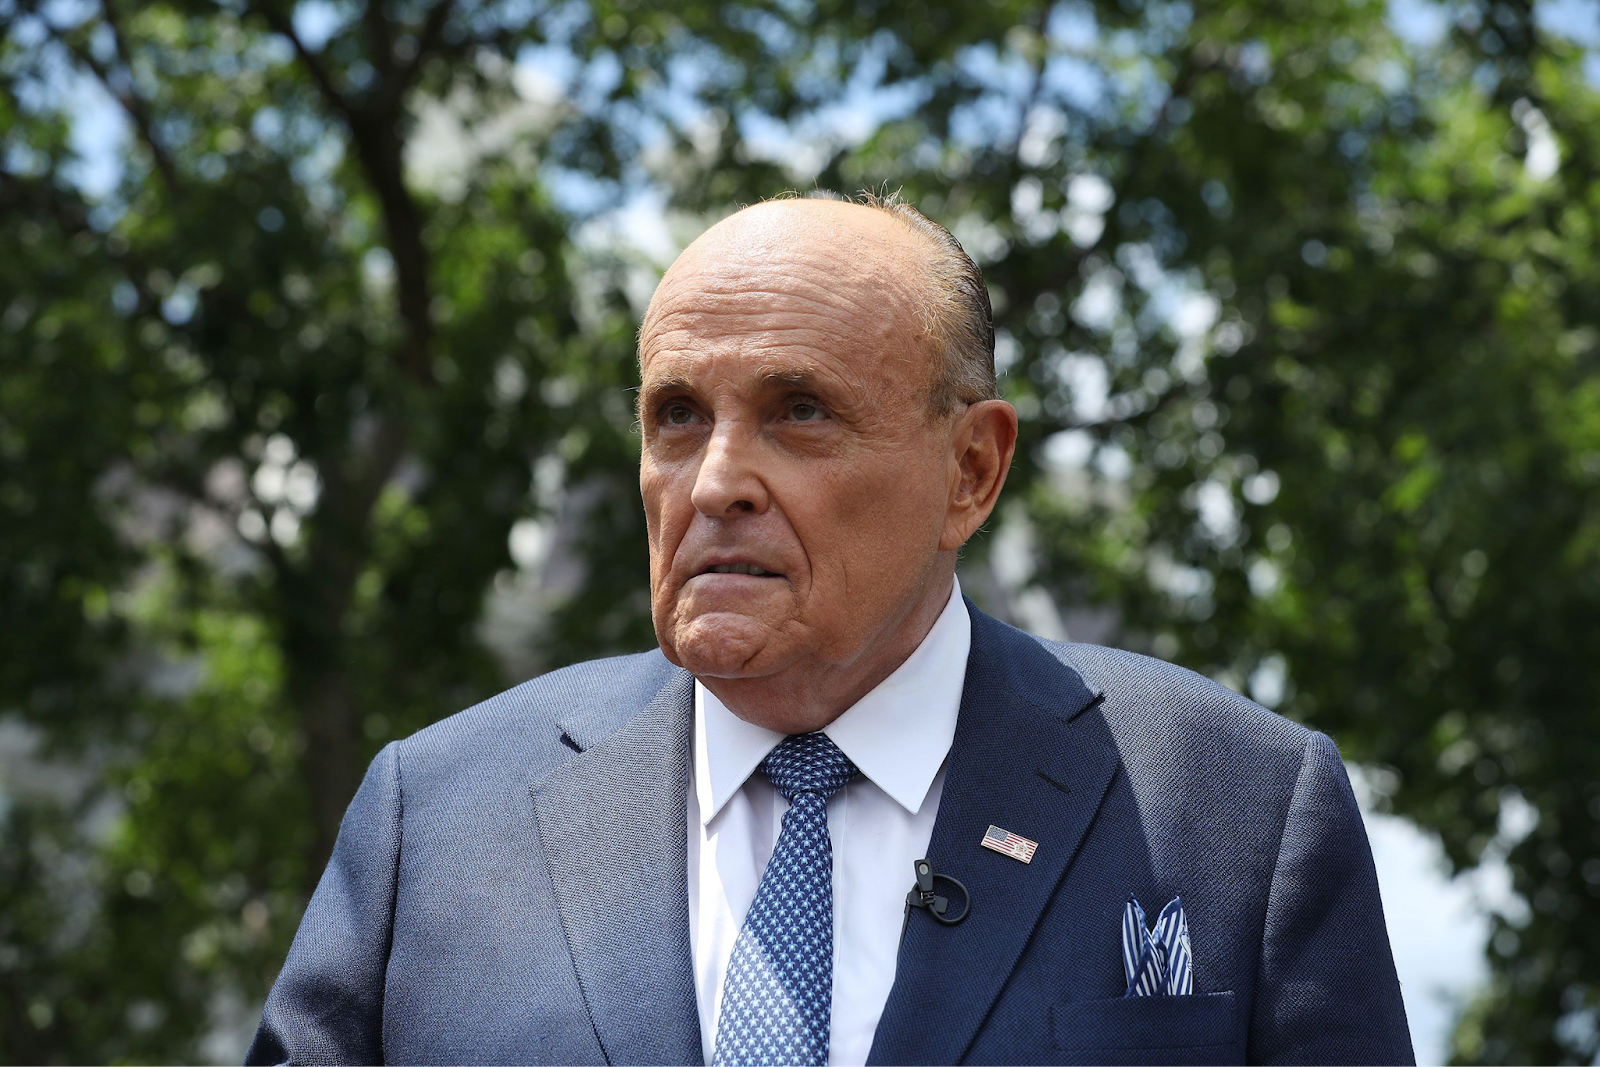 Rudy Giuliani Biography 